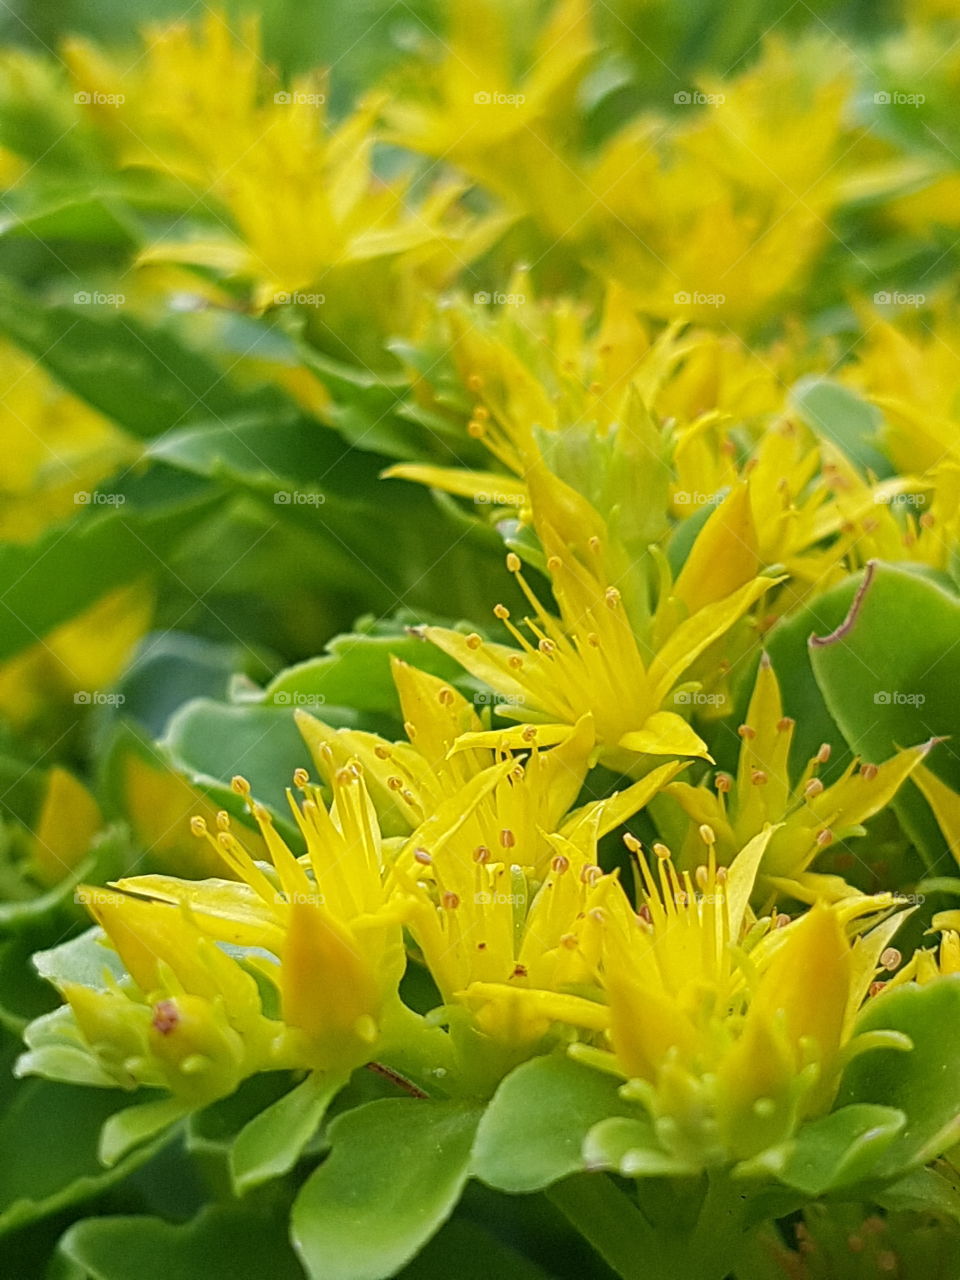 Yellow Sedum flowers close up.